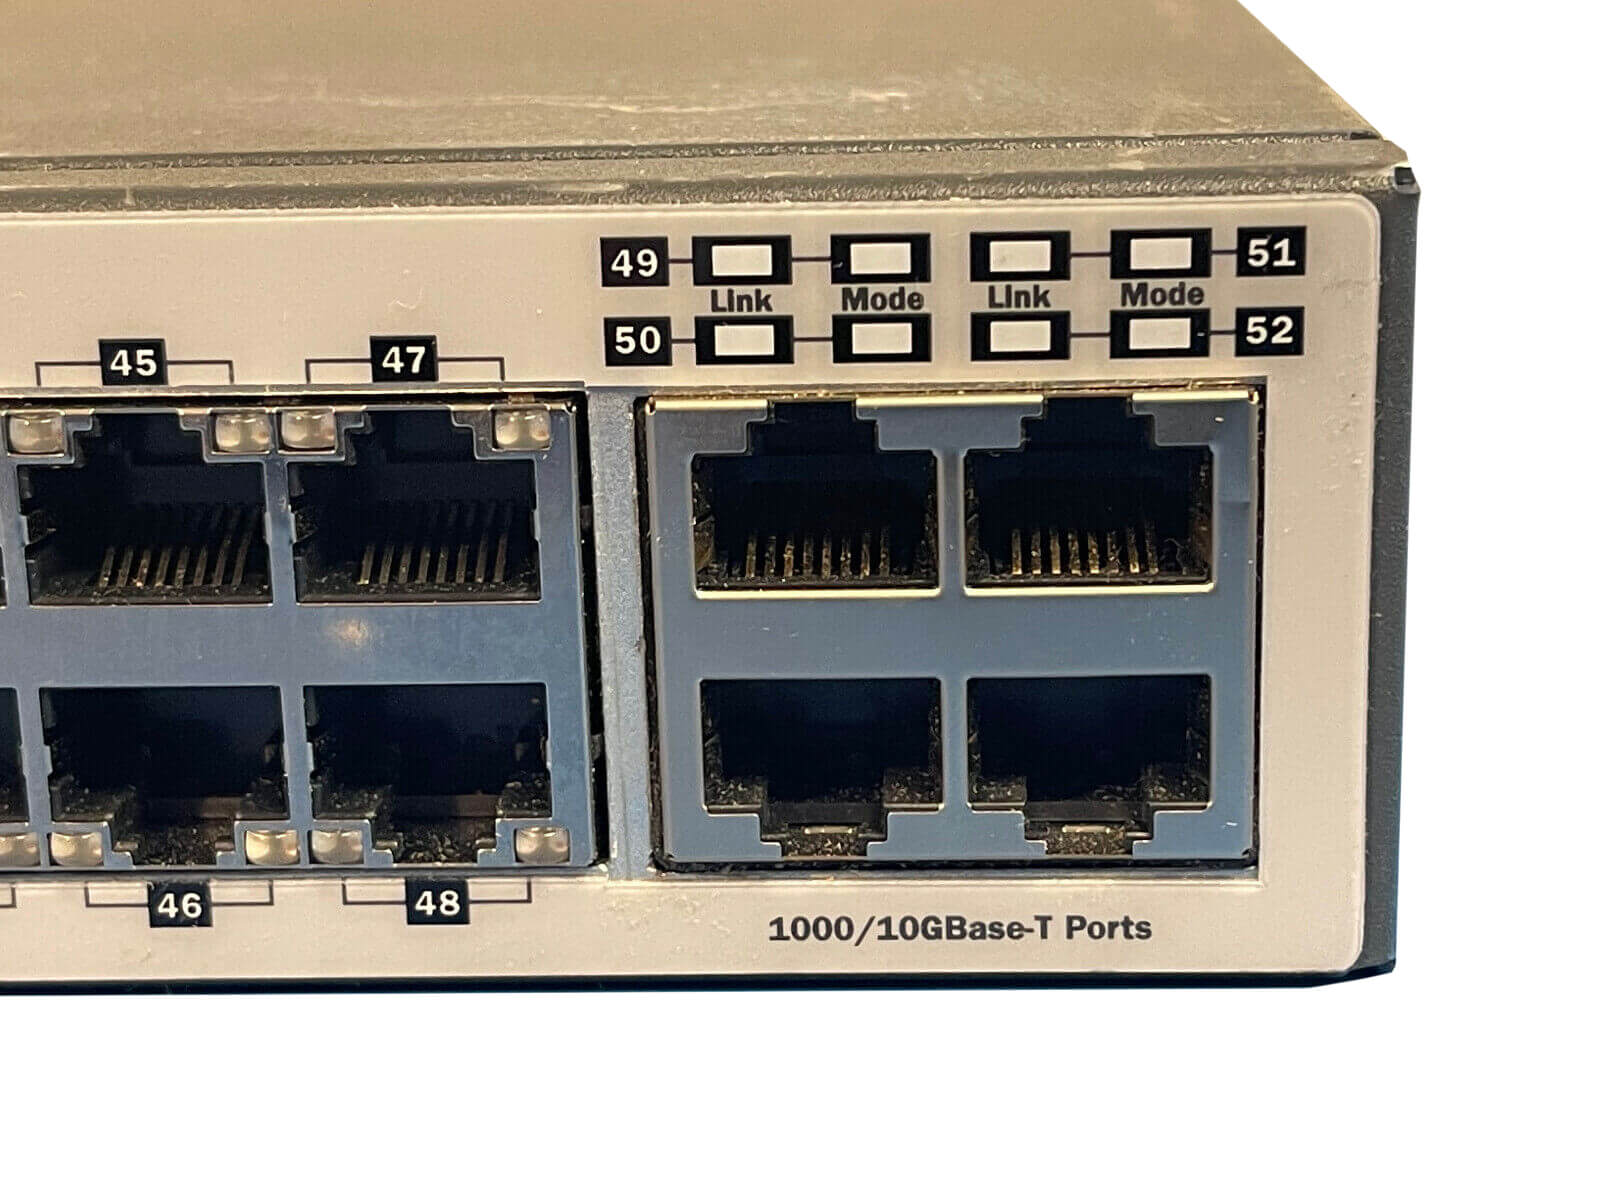 HP 3800-48G-4XG 48-Port Gigabit 4-Port 10 GbE L3 Ethernet Switch PSU Ears J9586A.